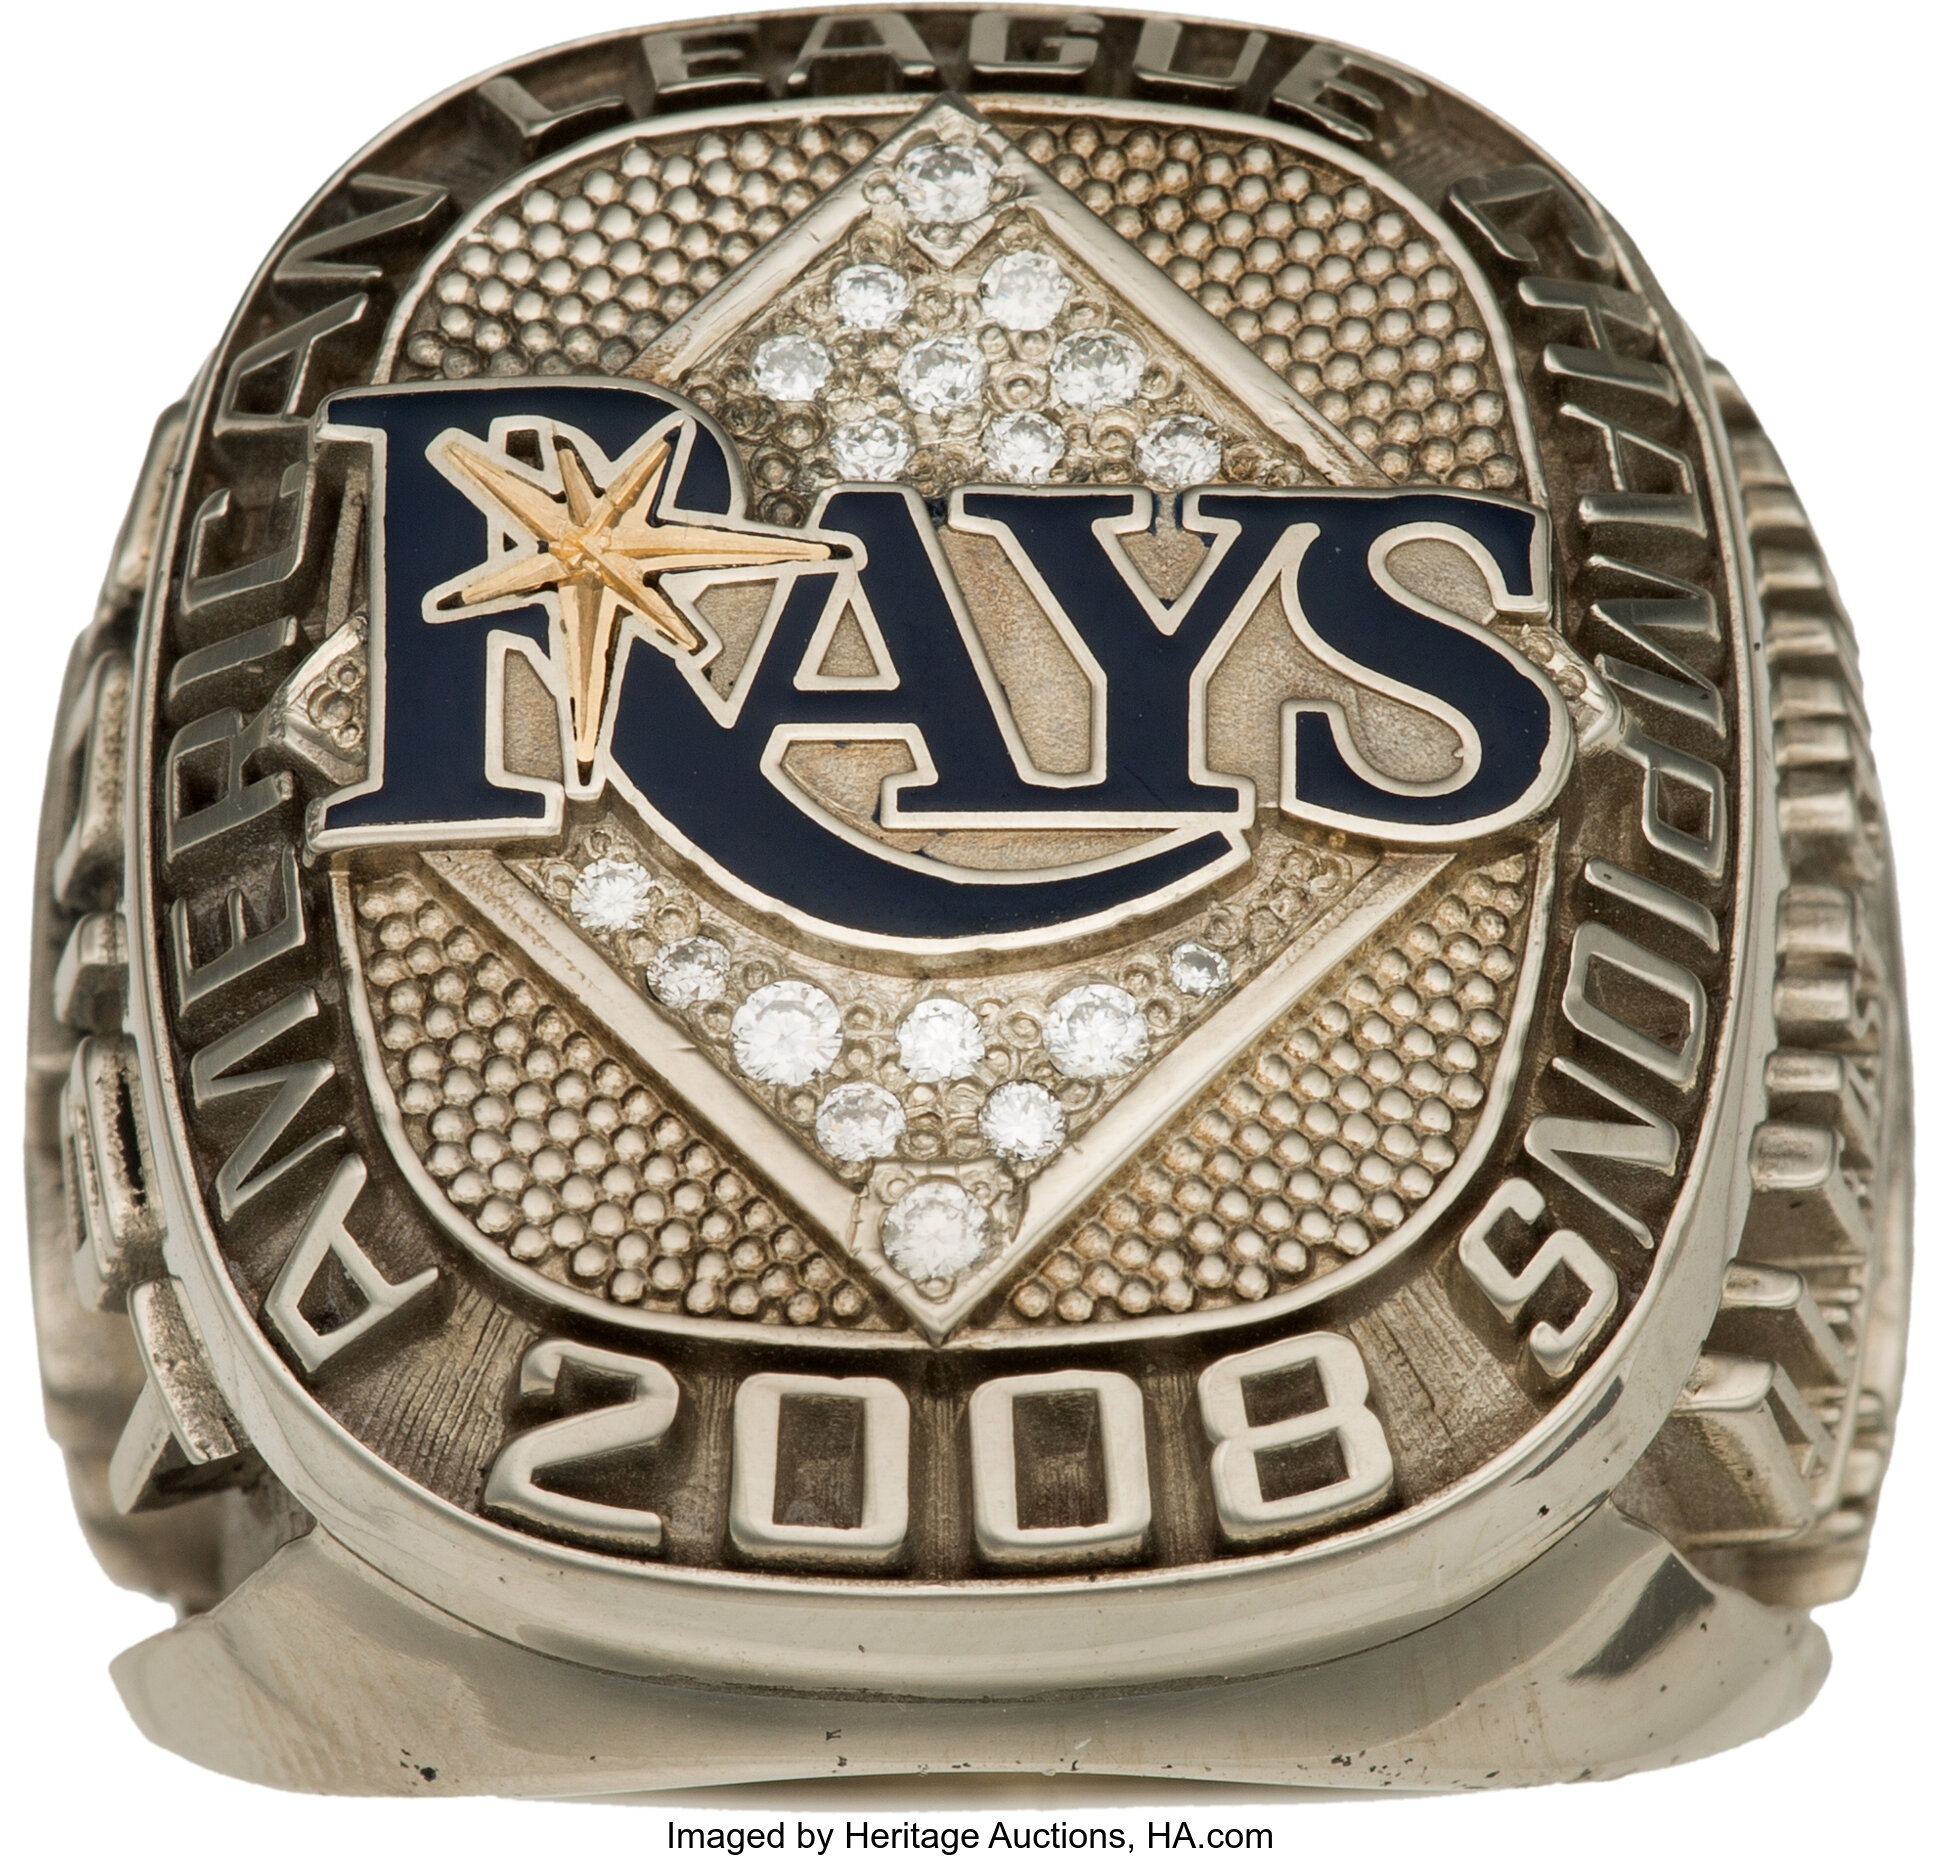 2008 Tampa Bay Rays American League Championship Ring. Baseball